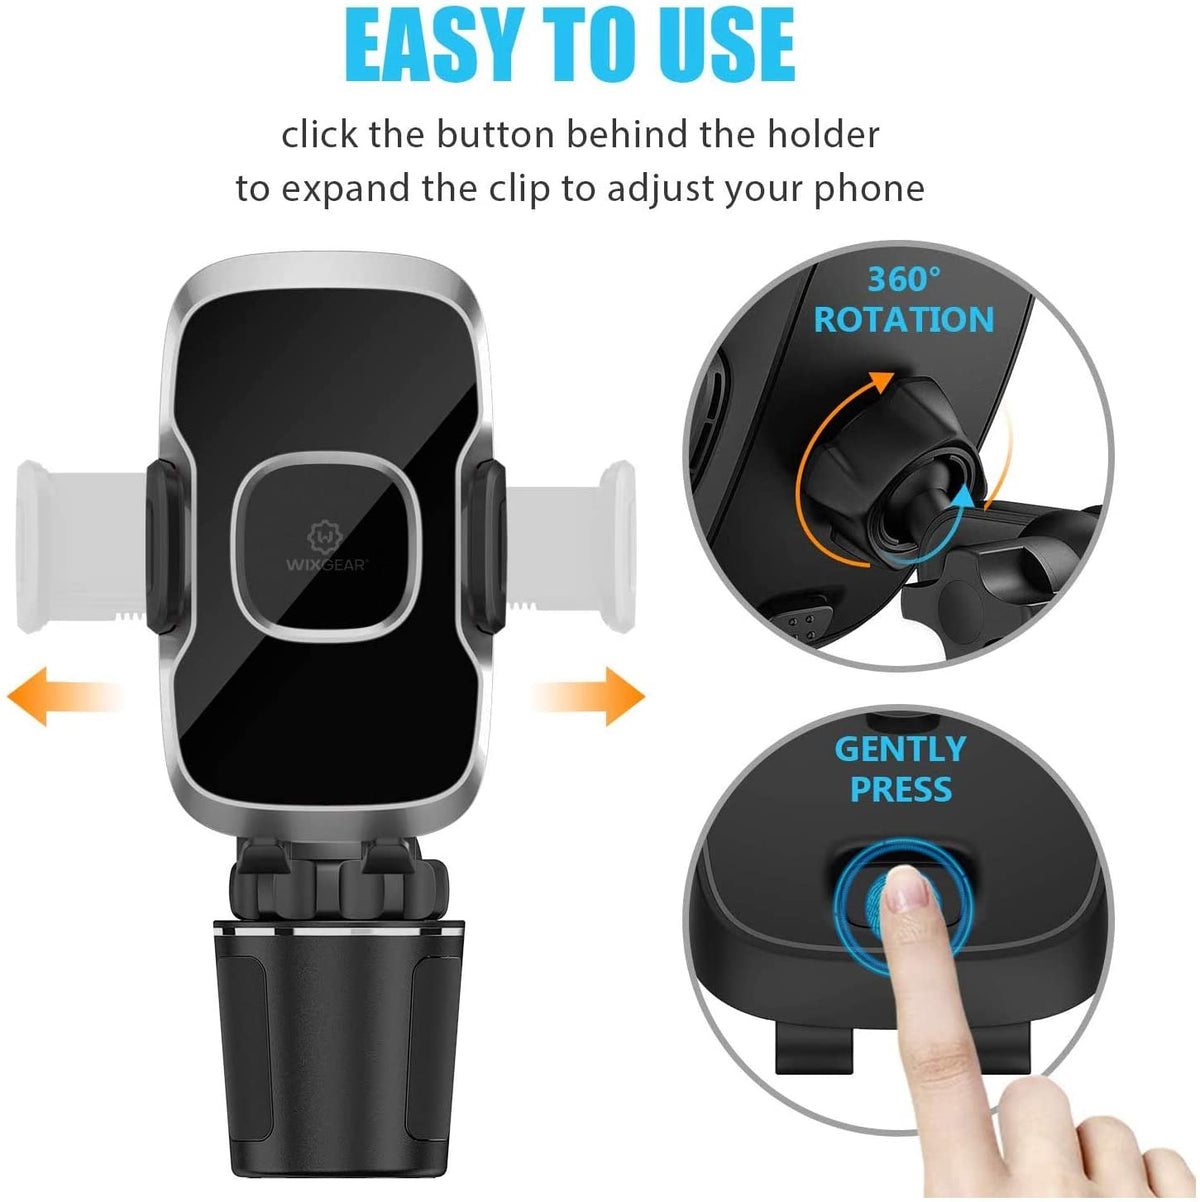 WixGear Cup Holder Phone Mount,Car Cup Holder Phone Mount Adjustable Automobile Cup Holder Smart Phone Cradle Car Mount